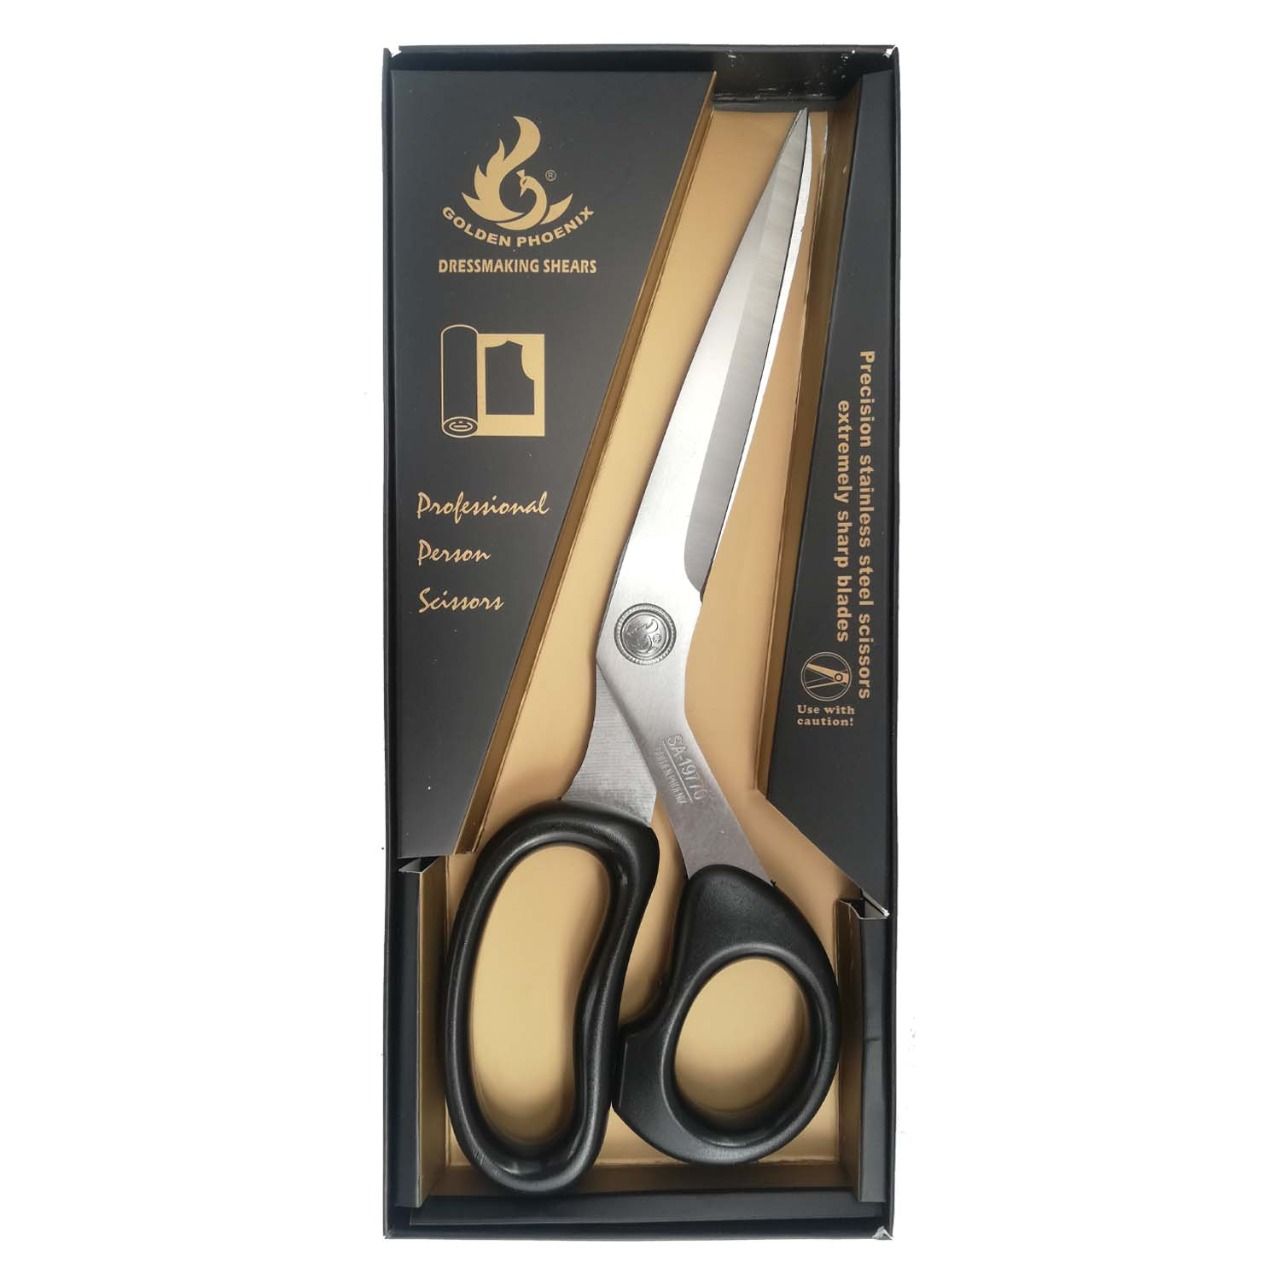 Exputran - Acrylic Scissors Clear And Gold-Toned Scissors